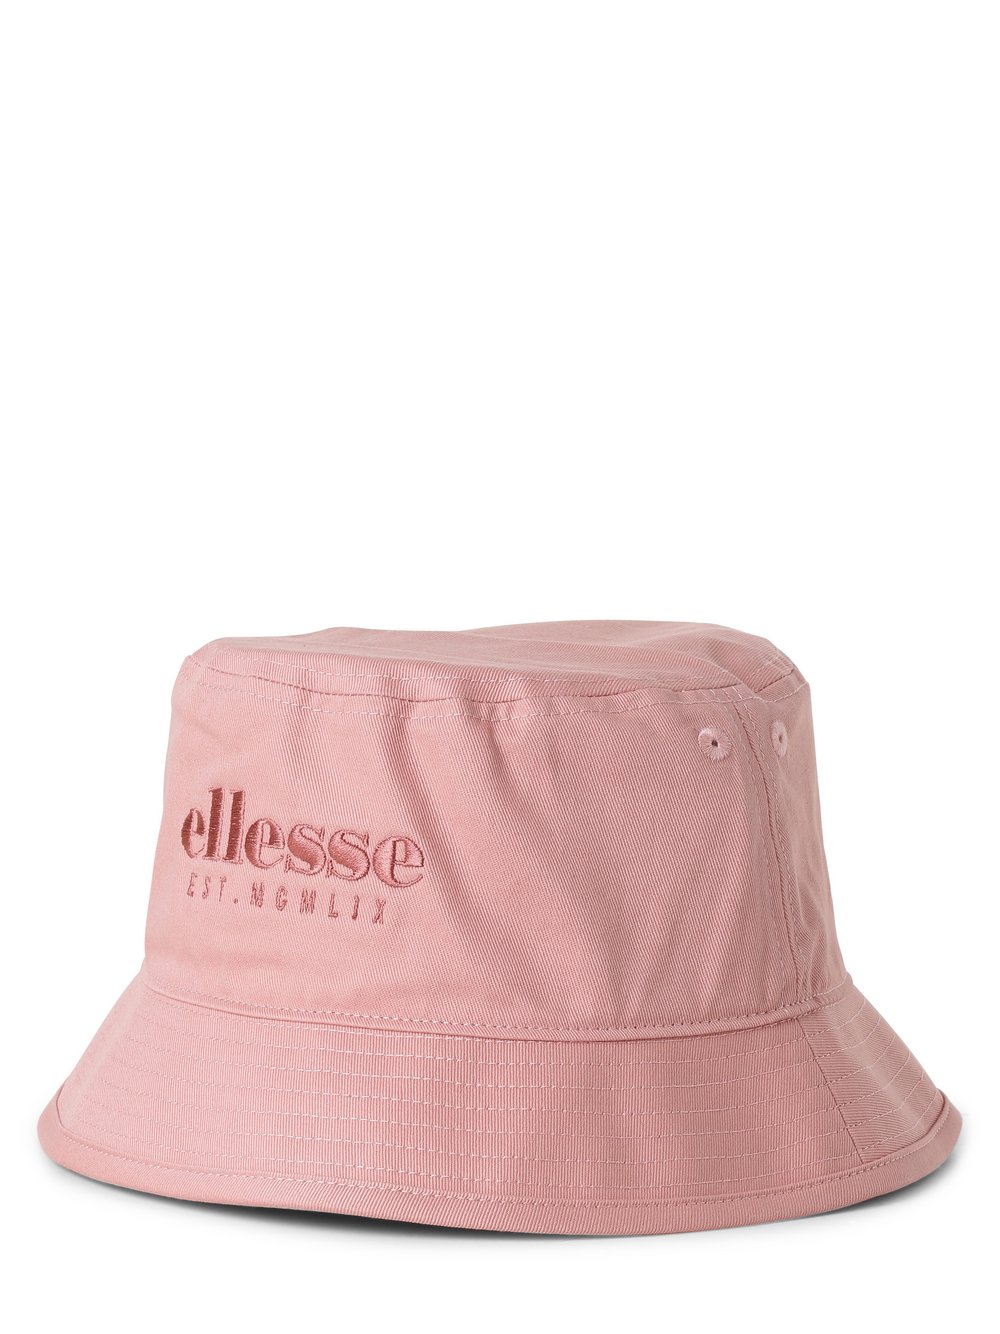 ellesse - Damski bucket hat – Terry, różowy